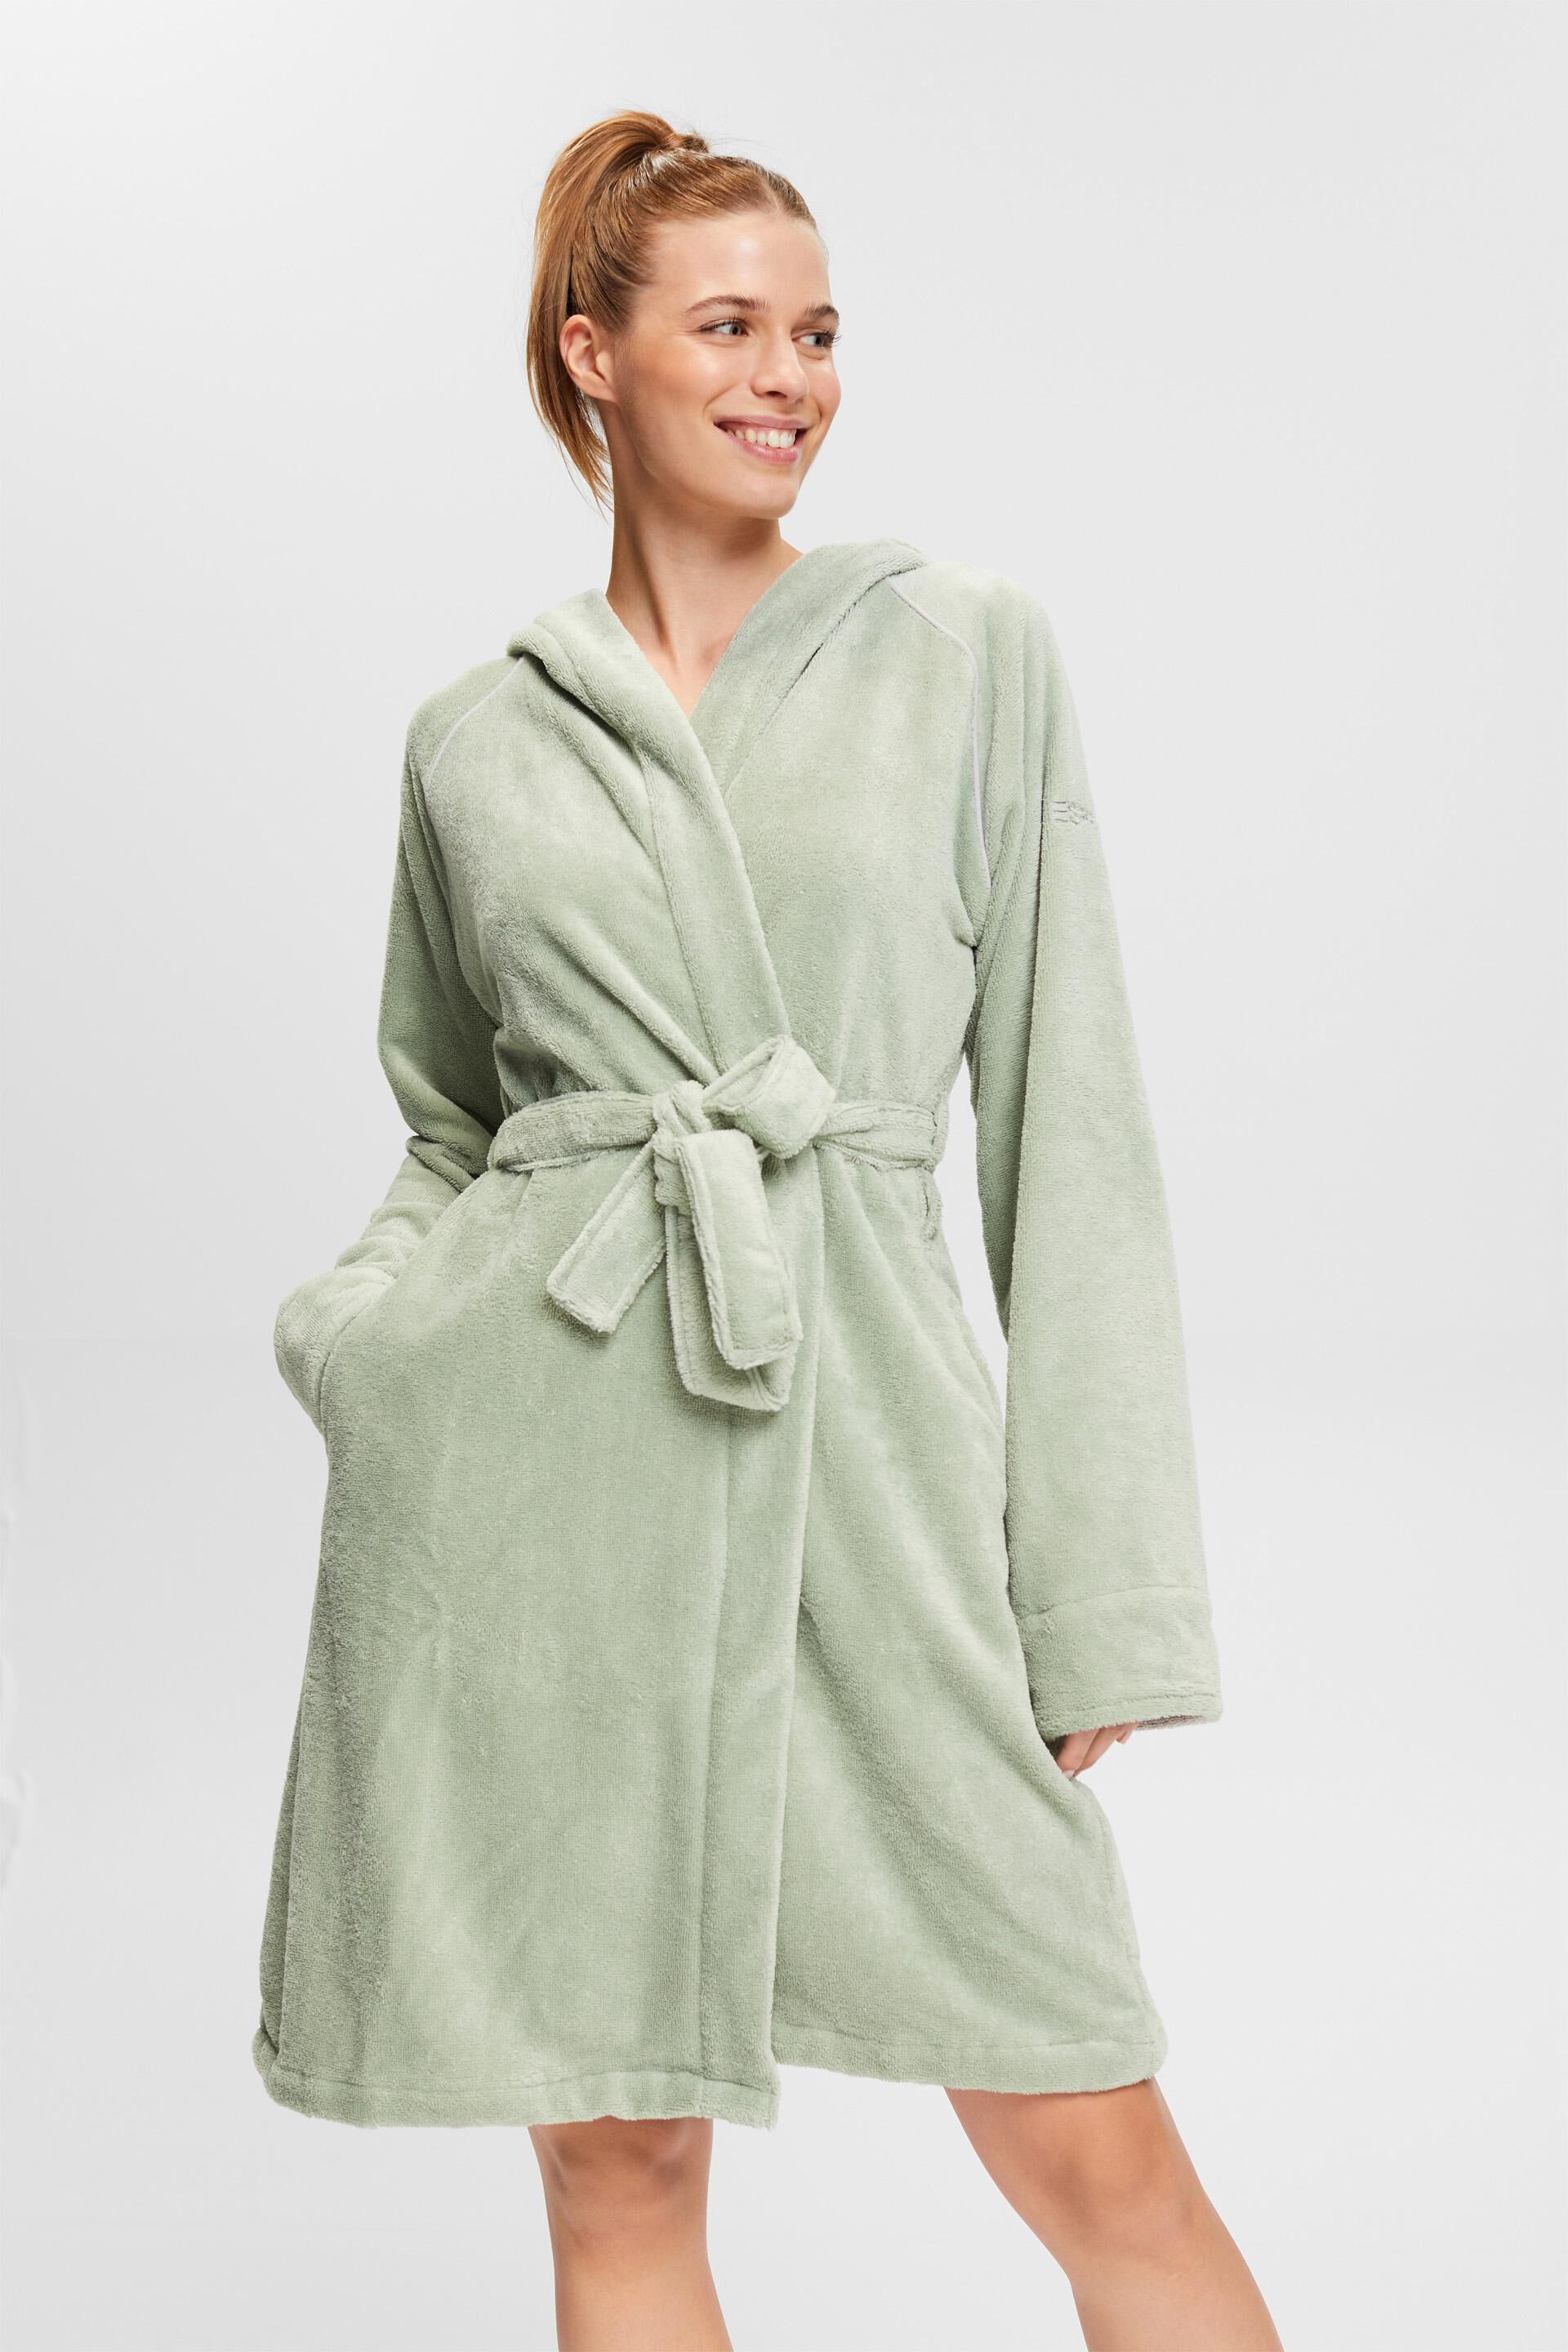 Esprit T Shirt Terry cloth bathrobe with hood